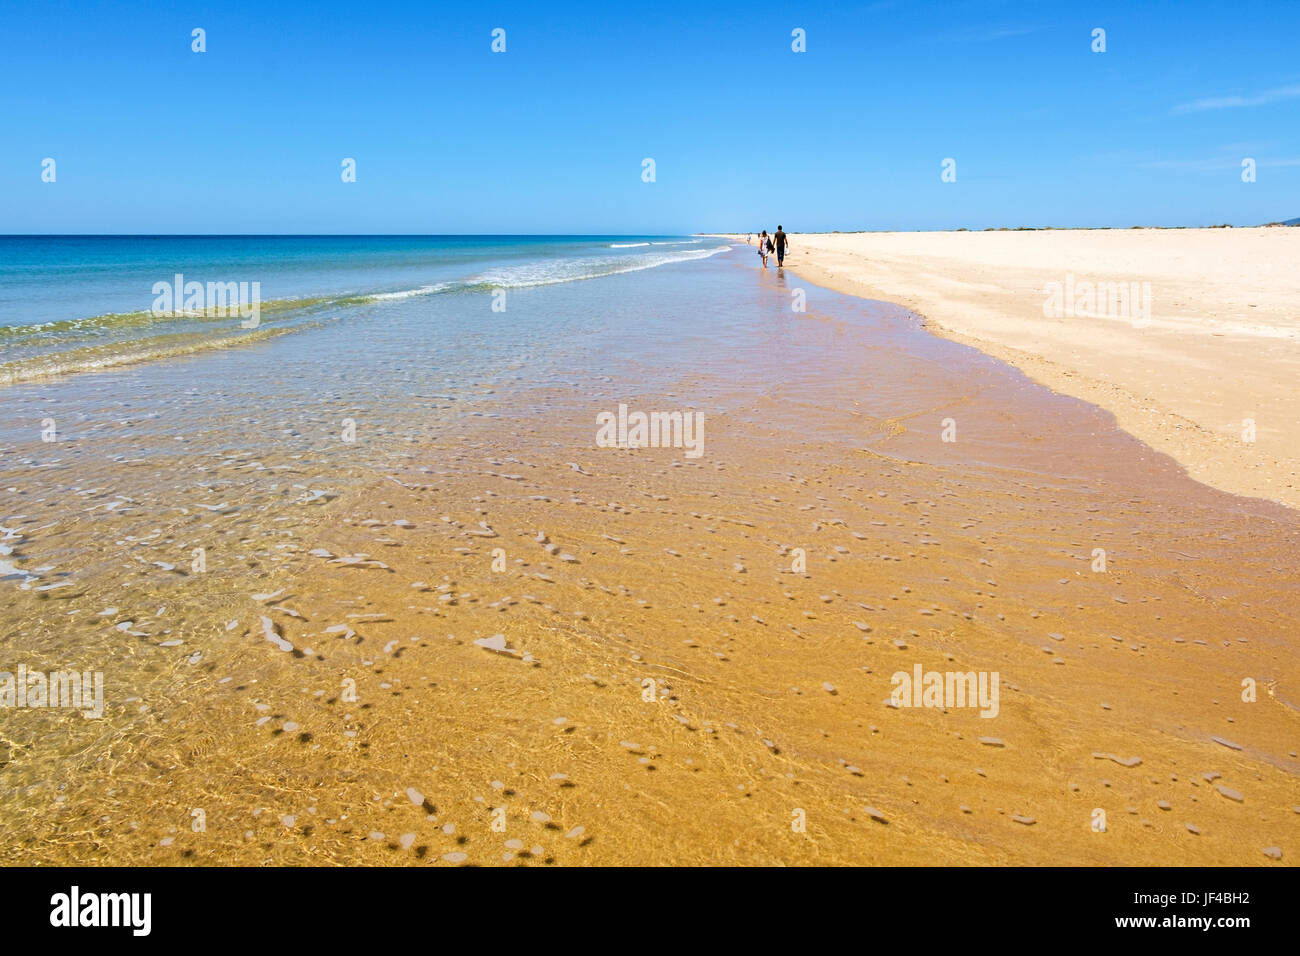 The beach on Ilha de Tavira, reached by boat from Tavira, Portugal Stock Photo